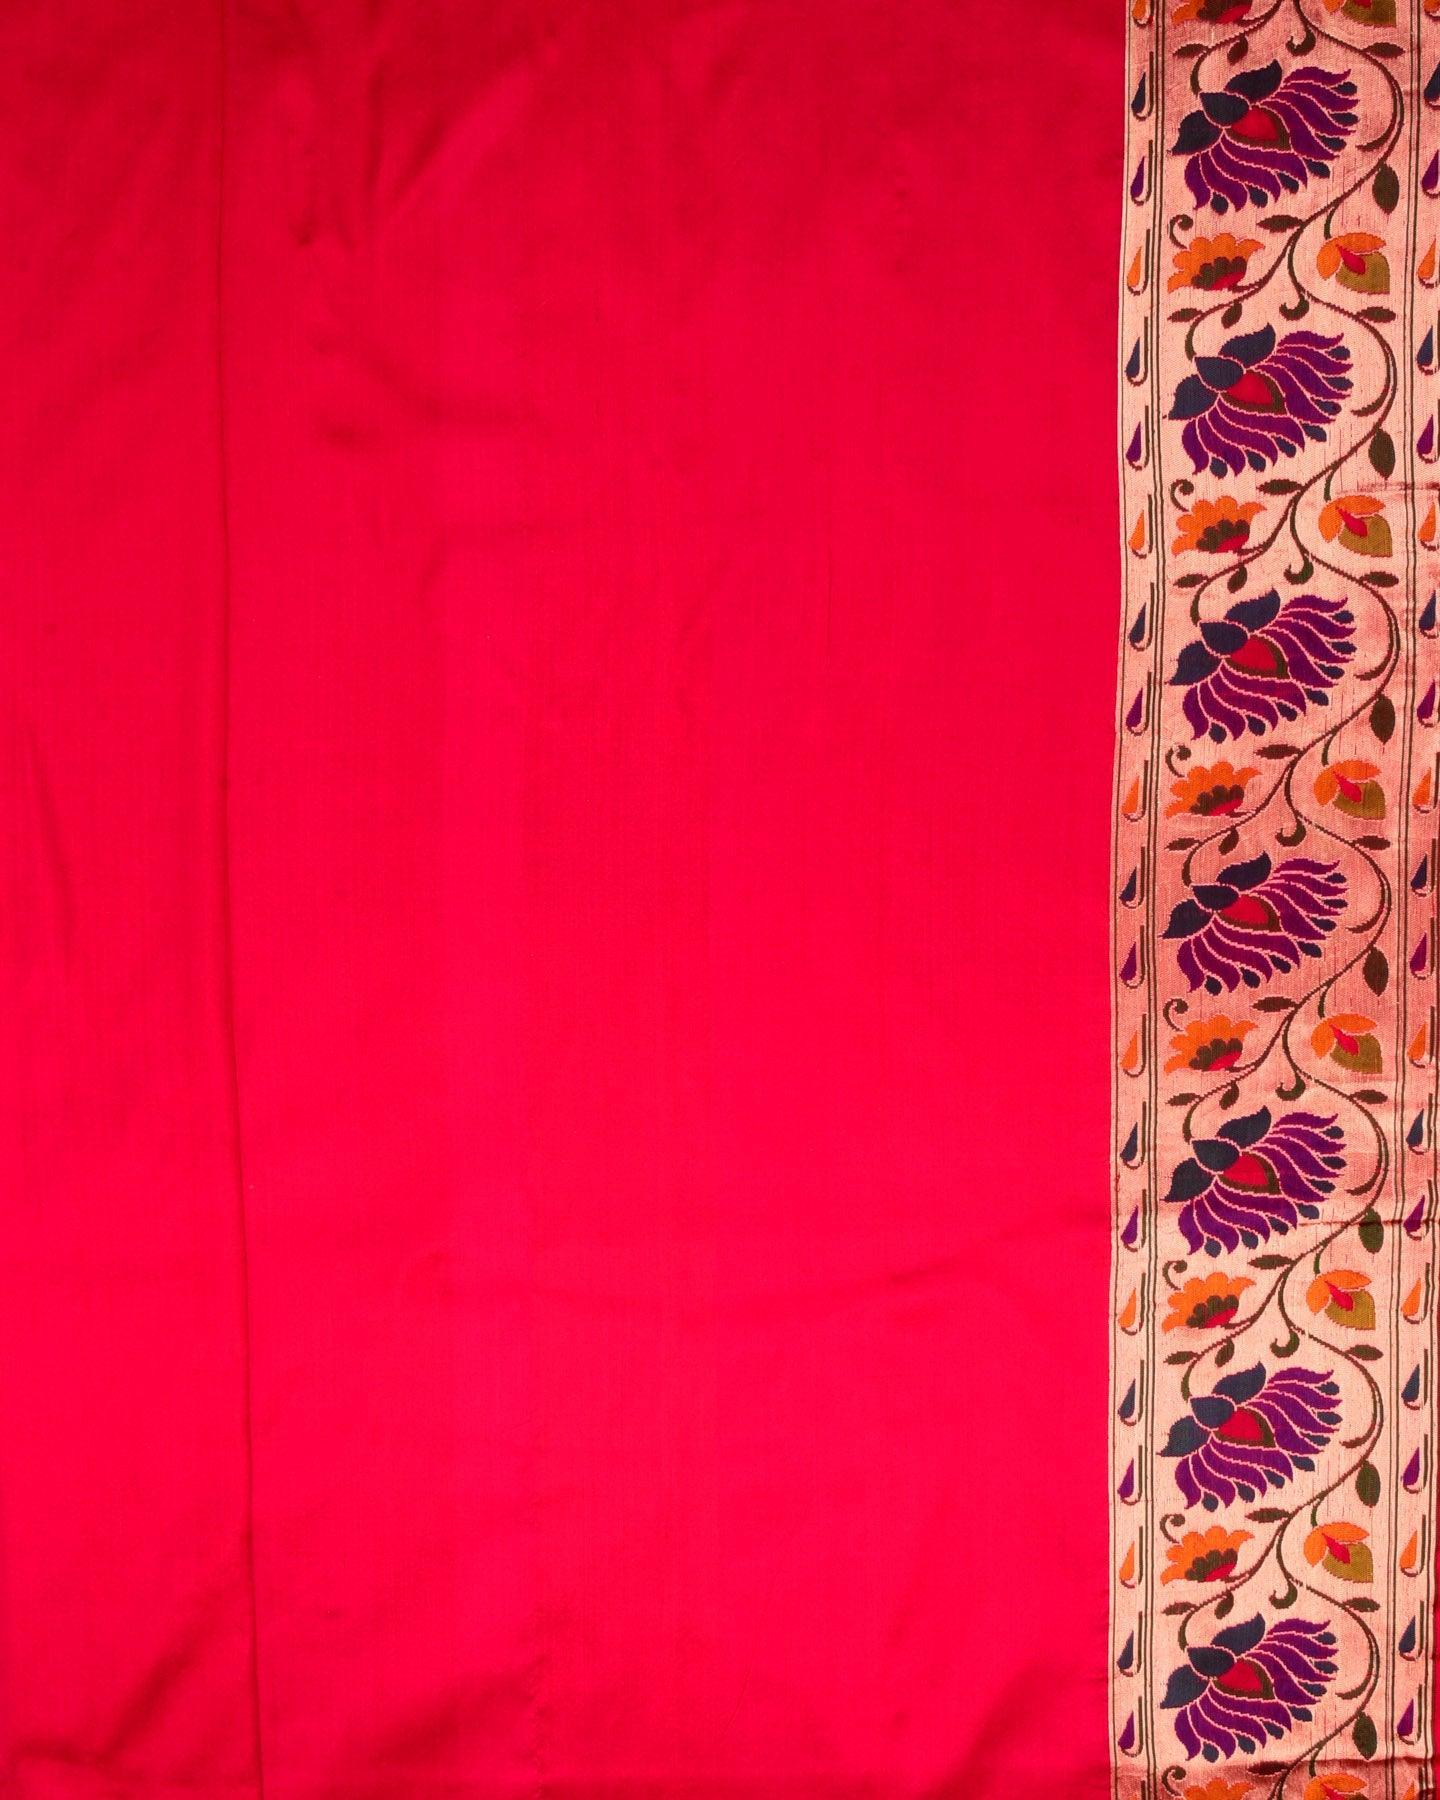 Shot Red-Pink Banarasi Paithani Brocade Handwoven Katan Silk Saree - By HolyWeaves, Benares